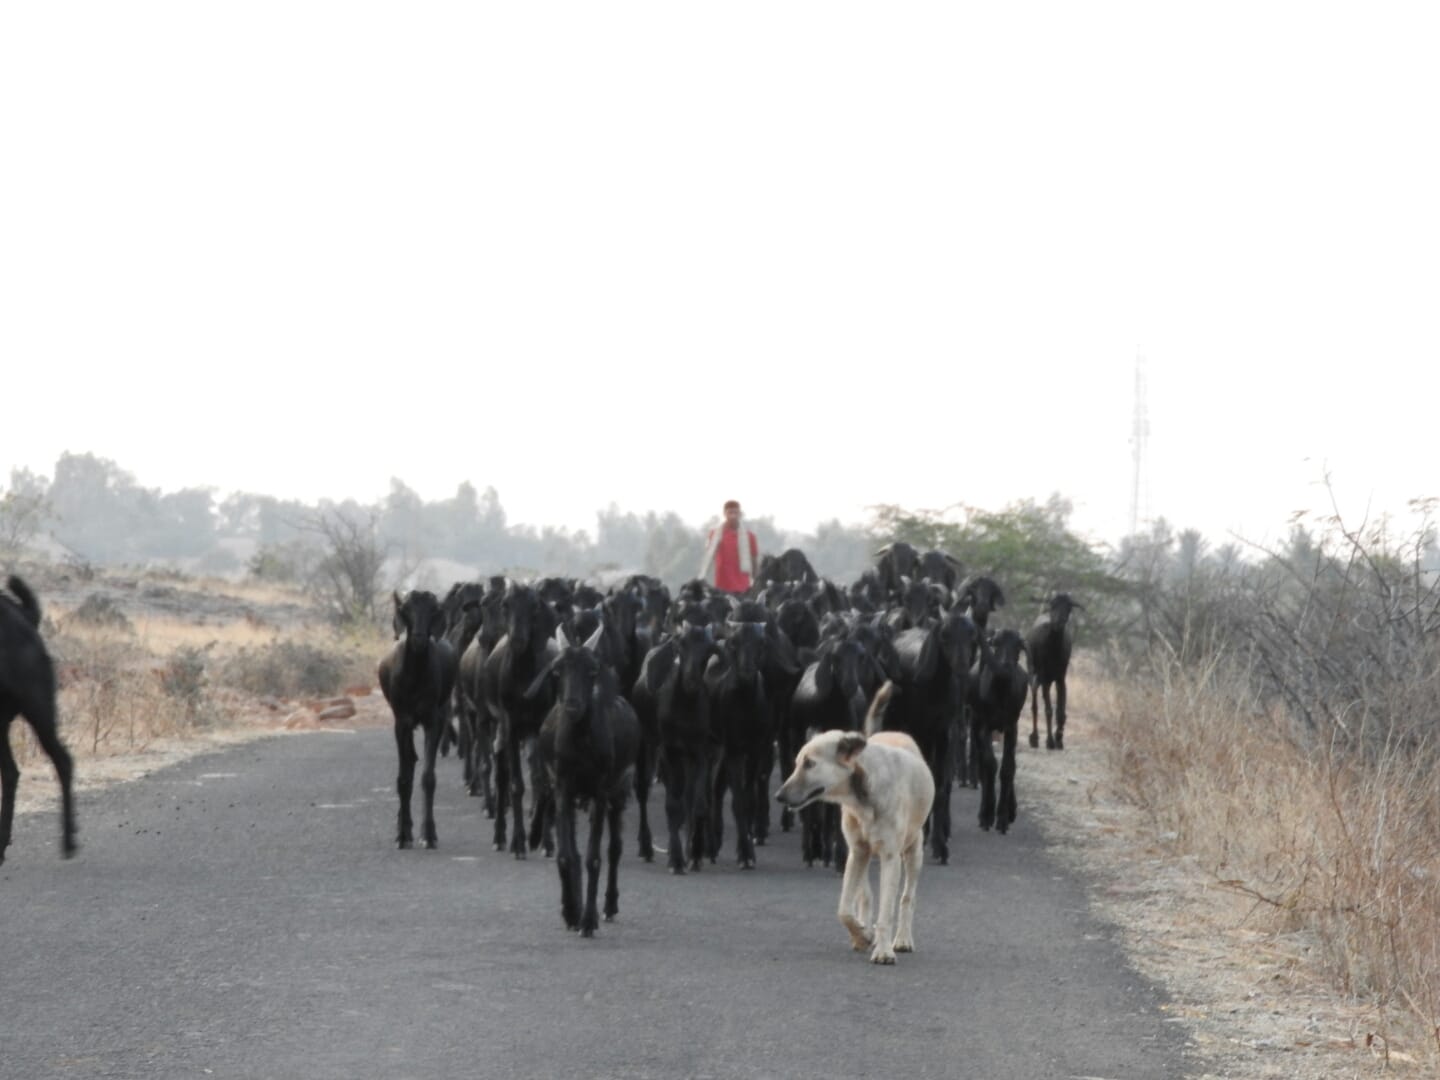 Godachinmalki village scenes - goats going back home